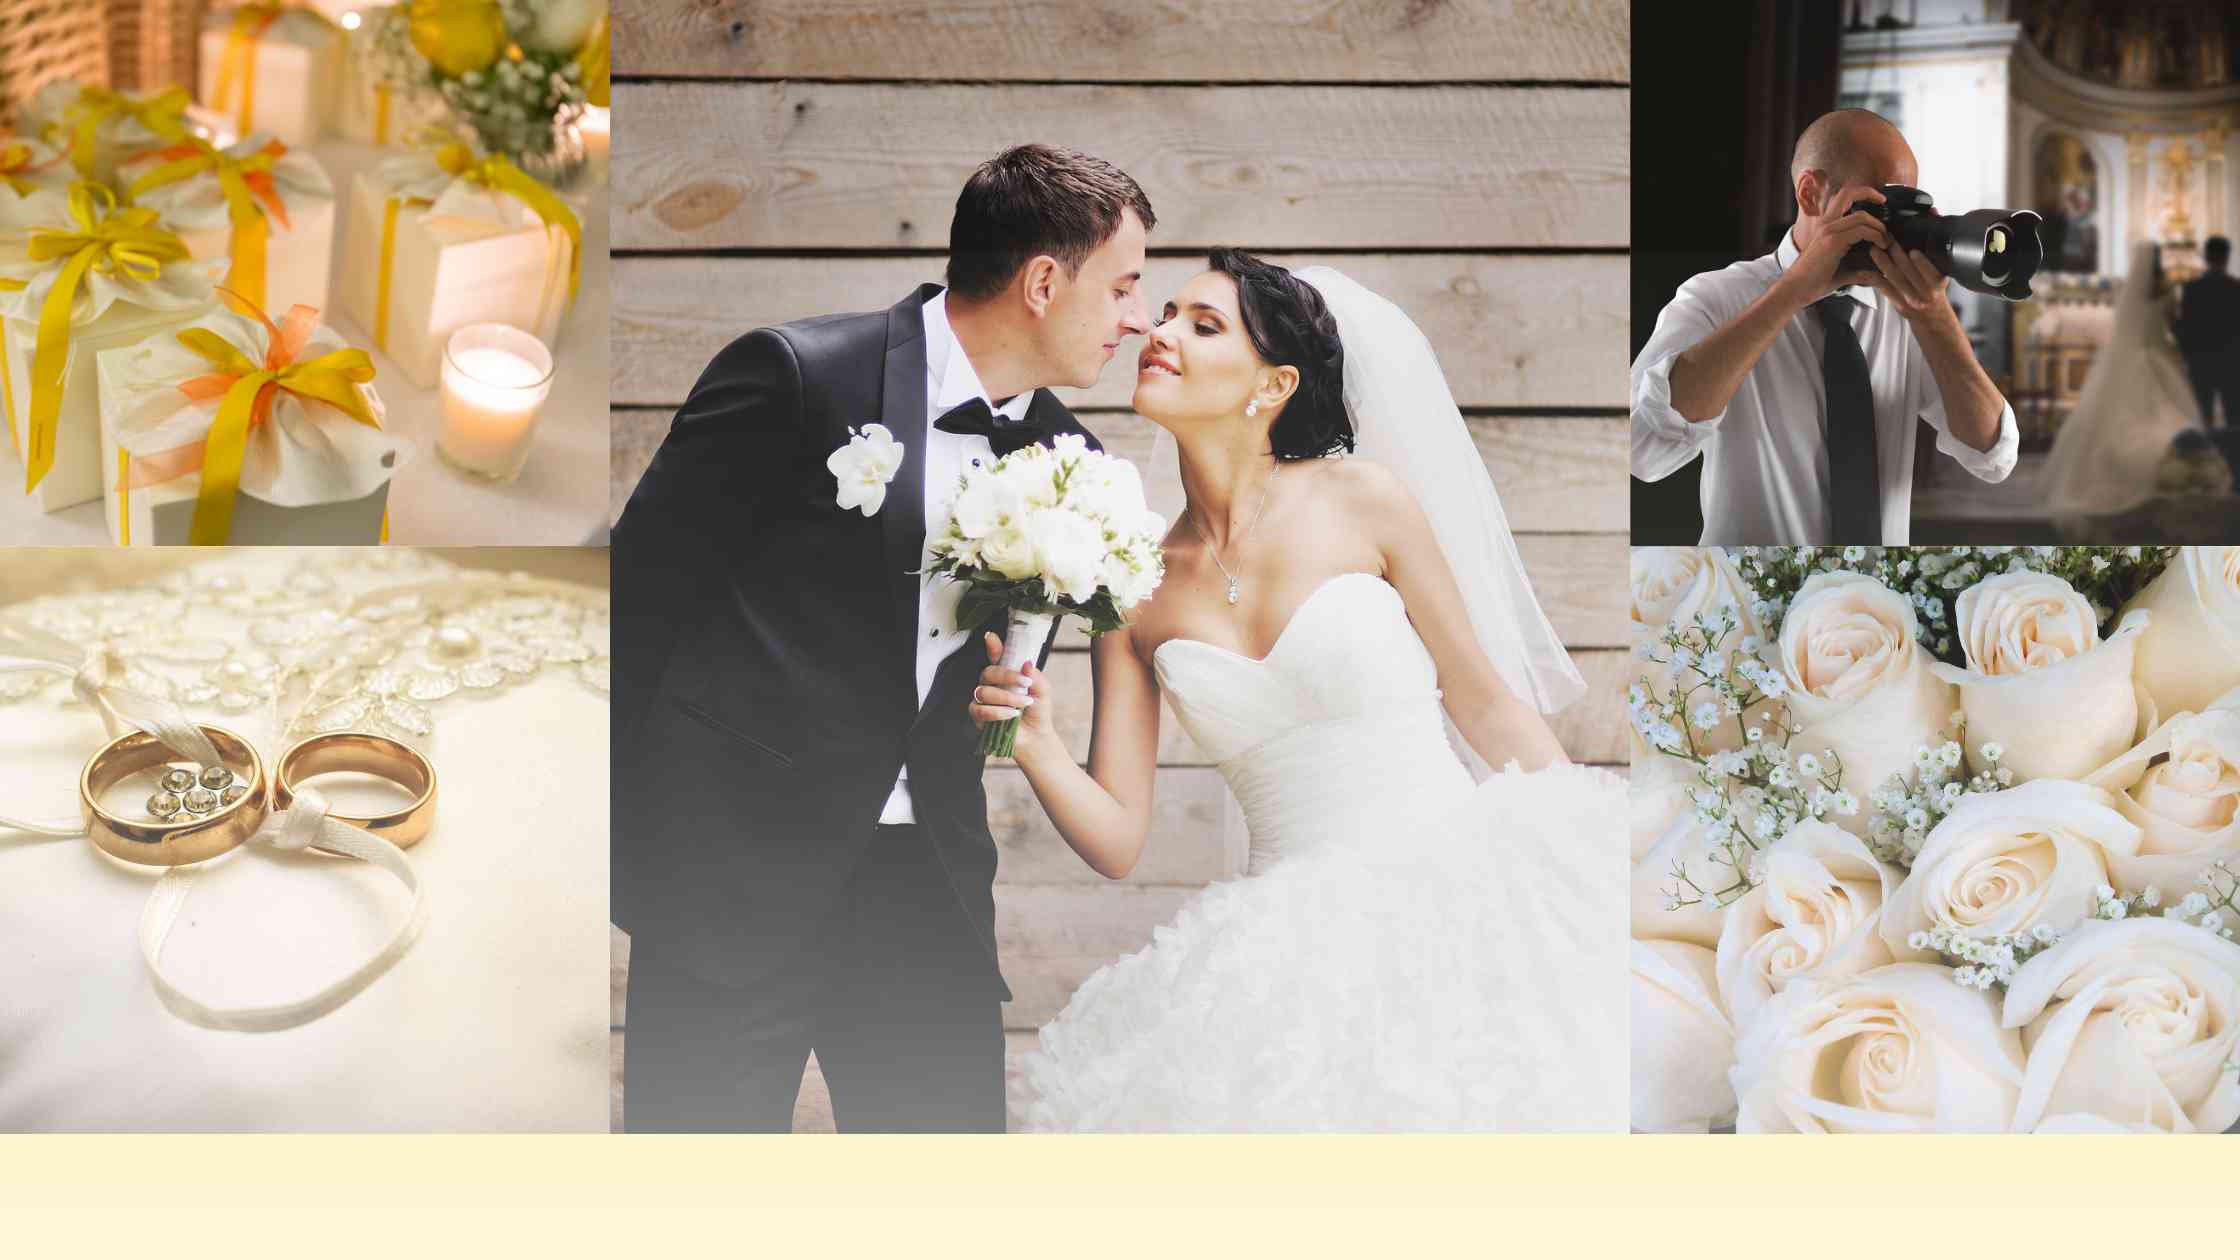 Baltimore Wedding Planning, Baltimore Wedding Photographers, Your Complete Wedding Planning Resource